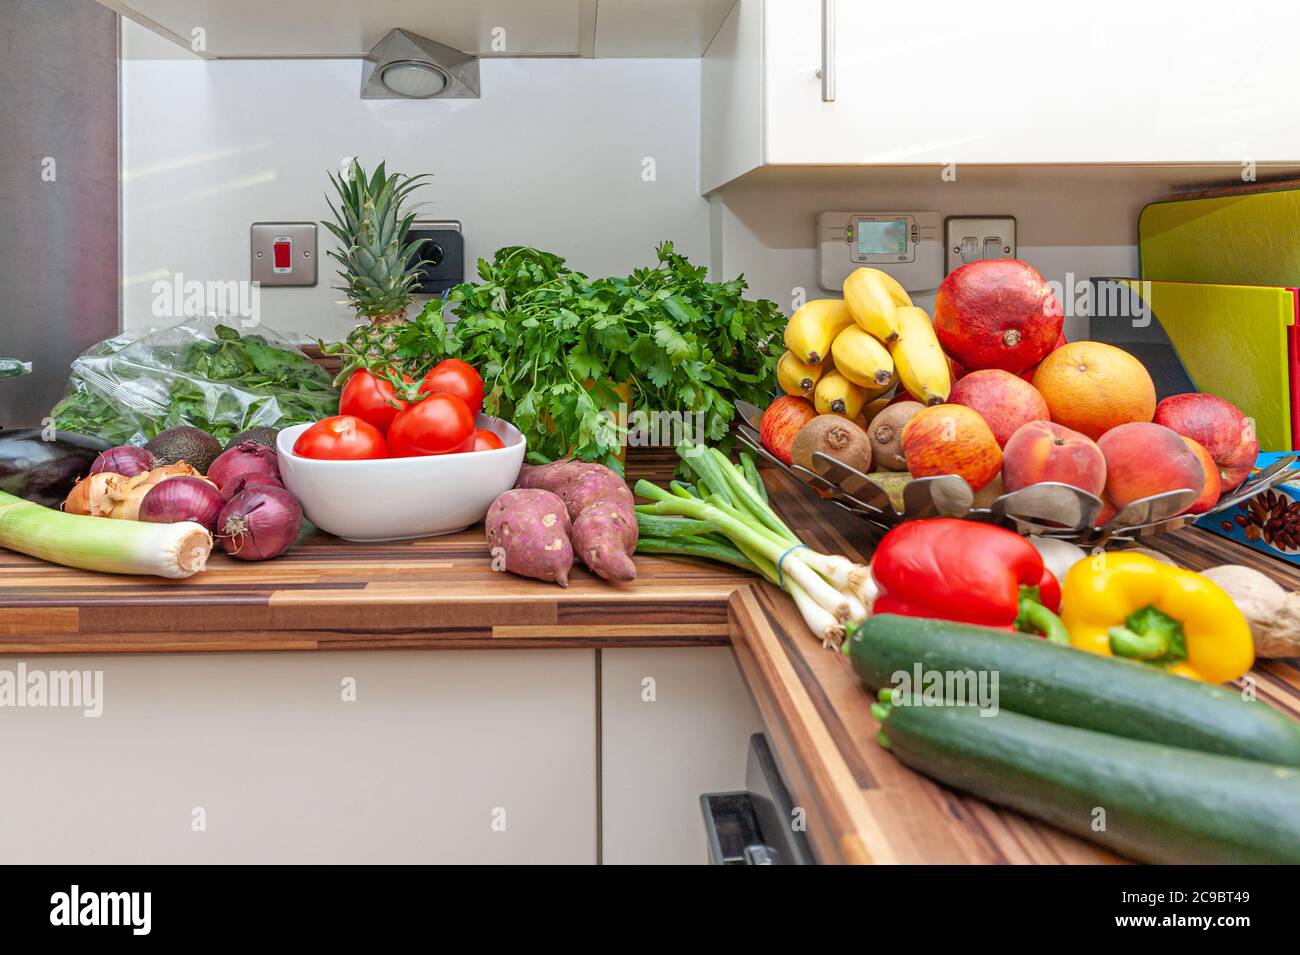 Abundance of fresh vegetables and fruits on kitchen worktop. Stock Photo